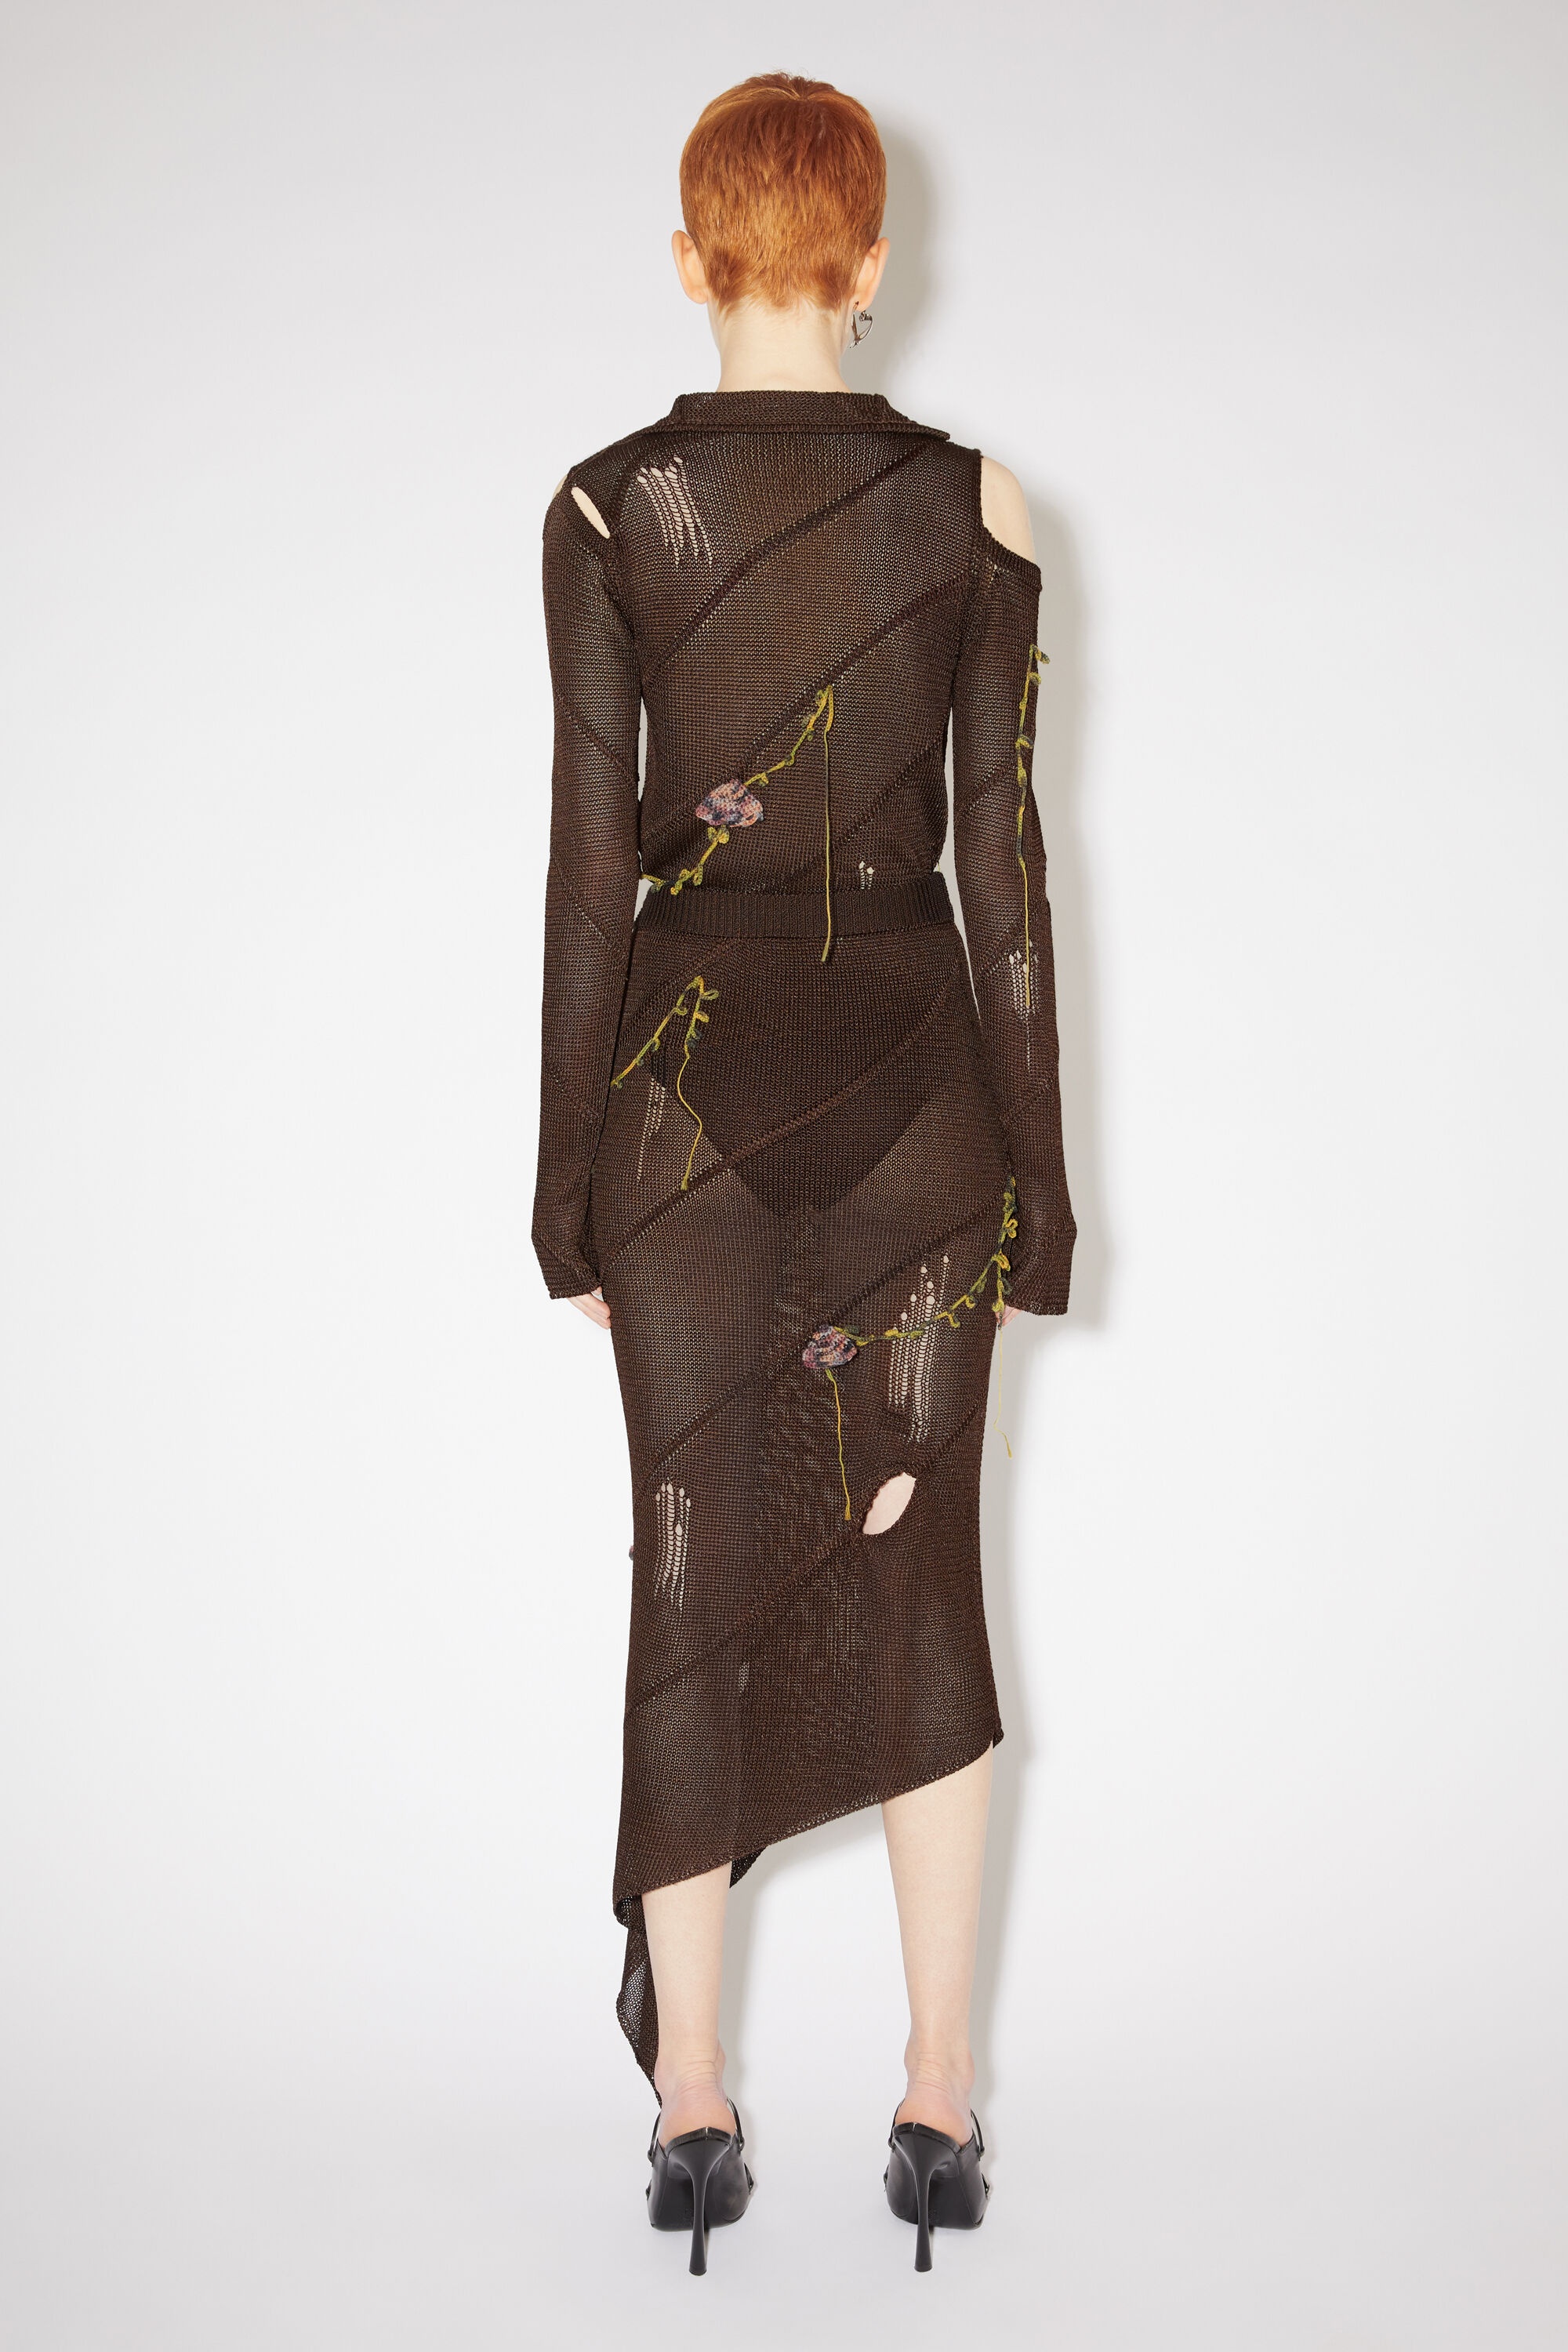 Crochet flower skirt - Chocolate brown - 3